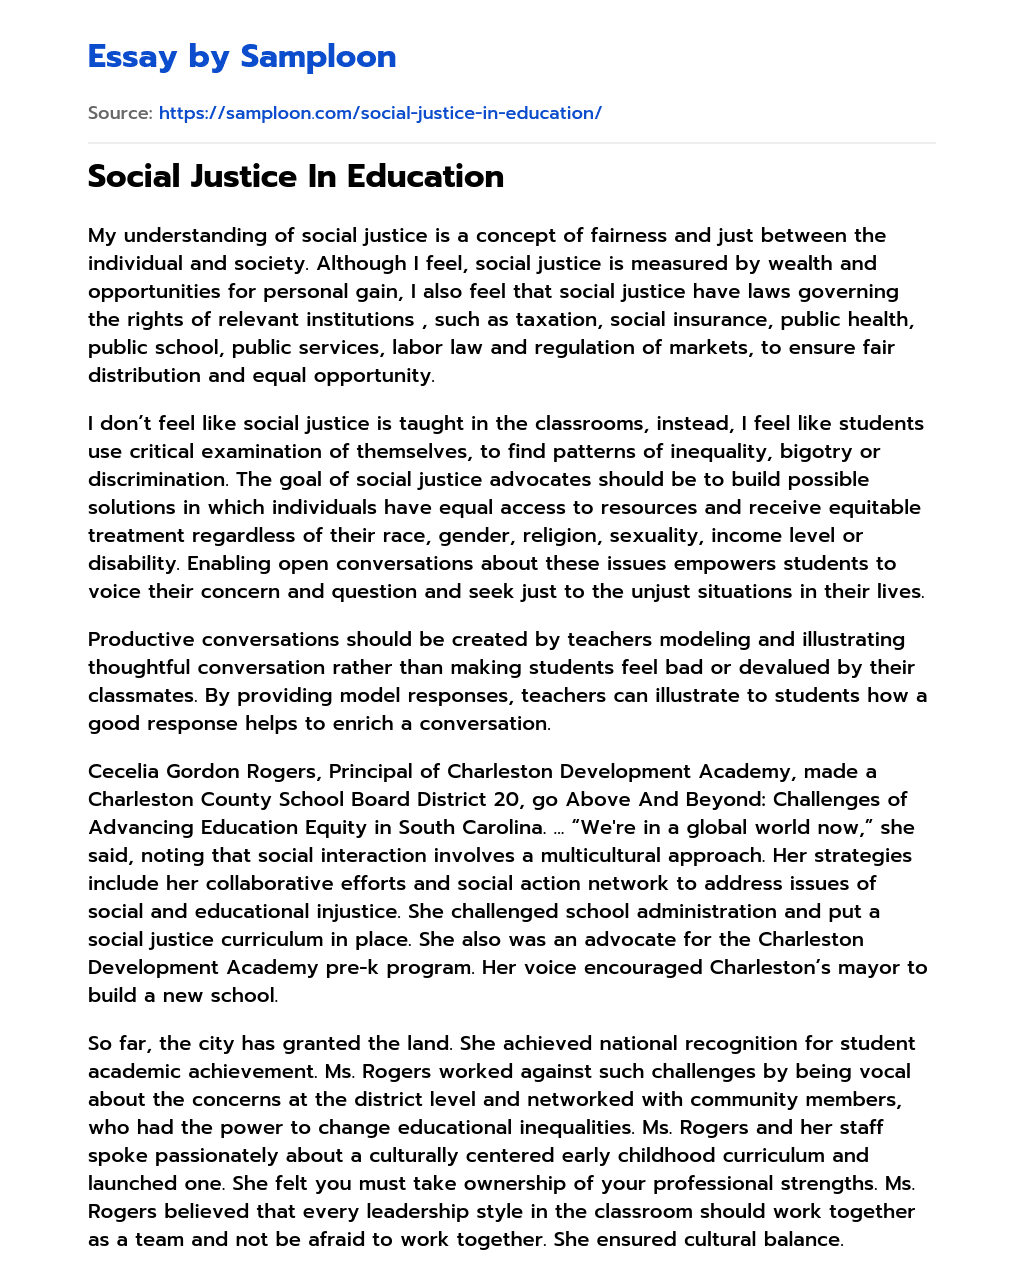 Social Justice In Education essay